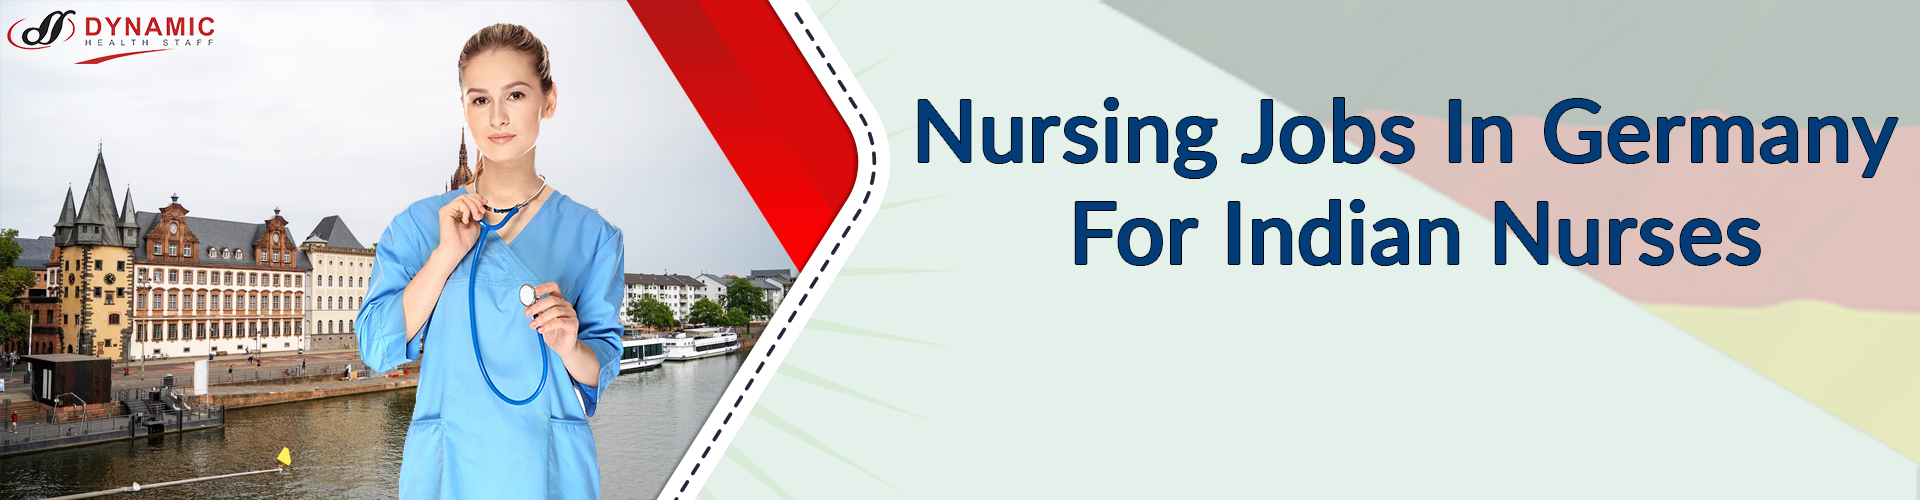 Nursing Jobs In Germany For Indian Nurses